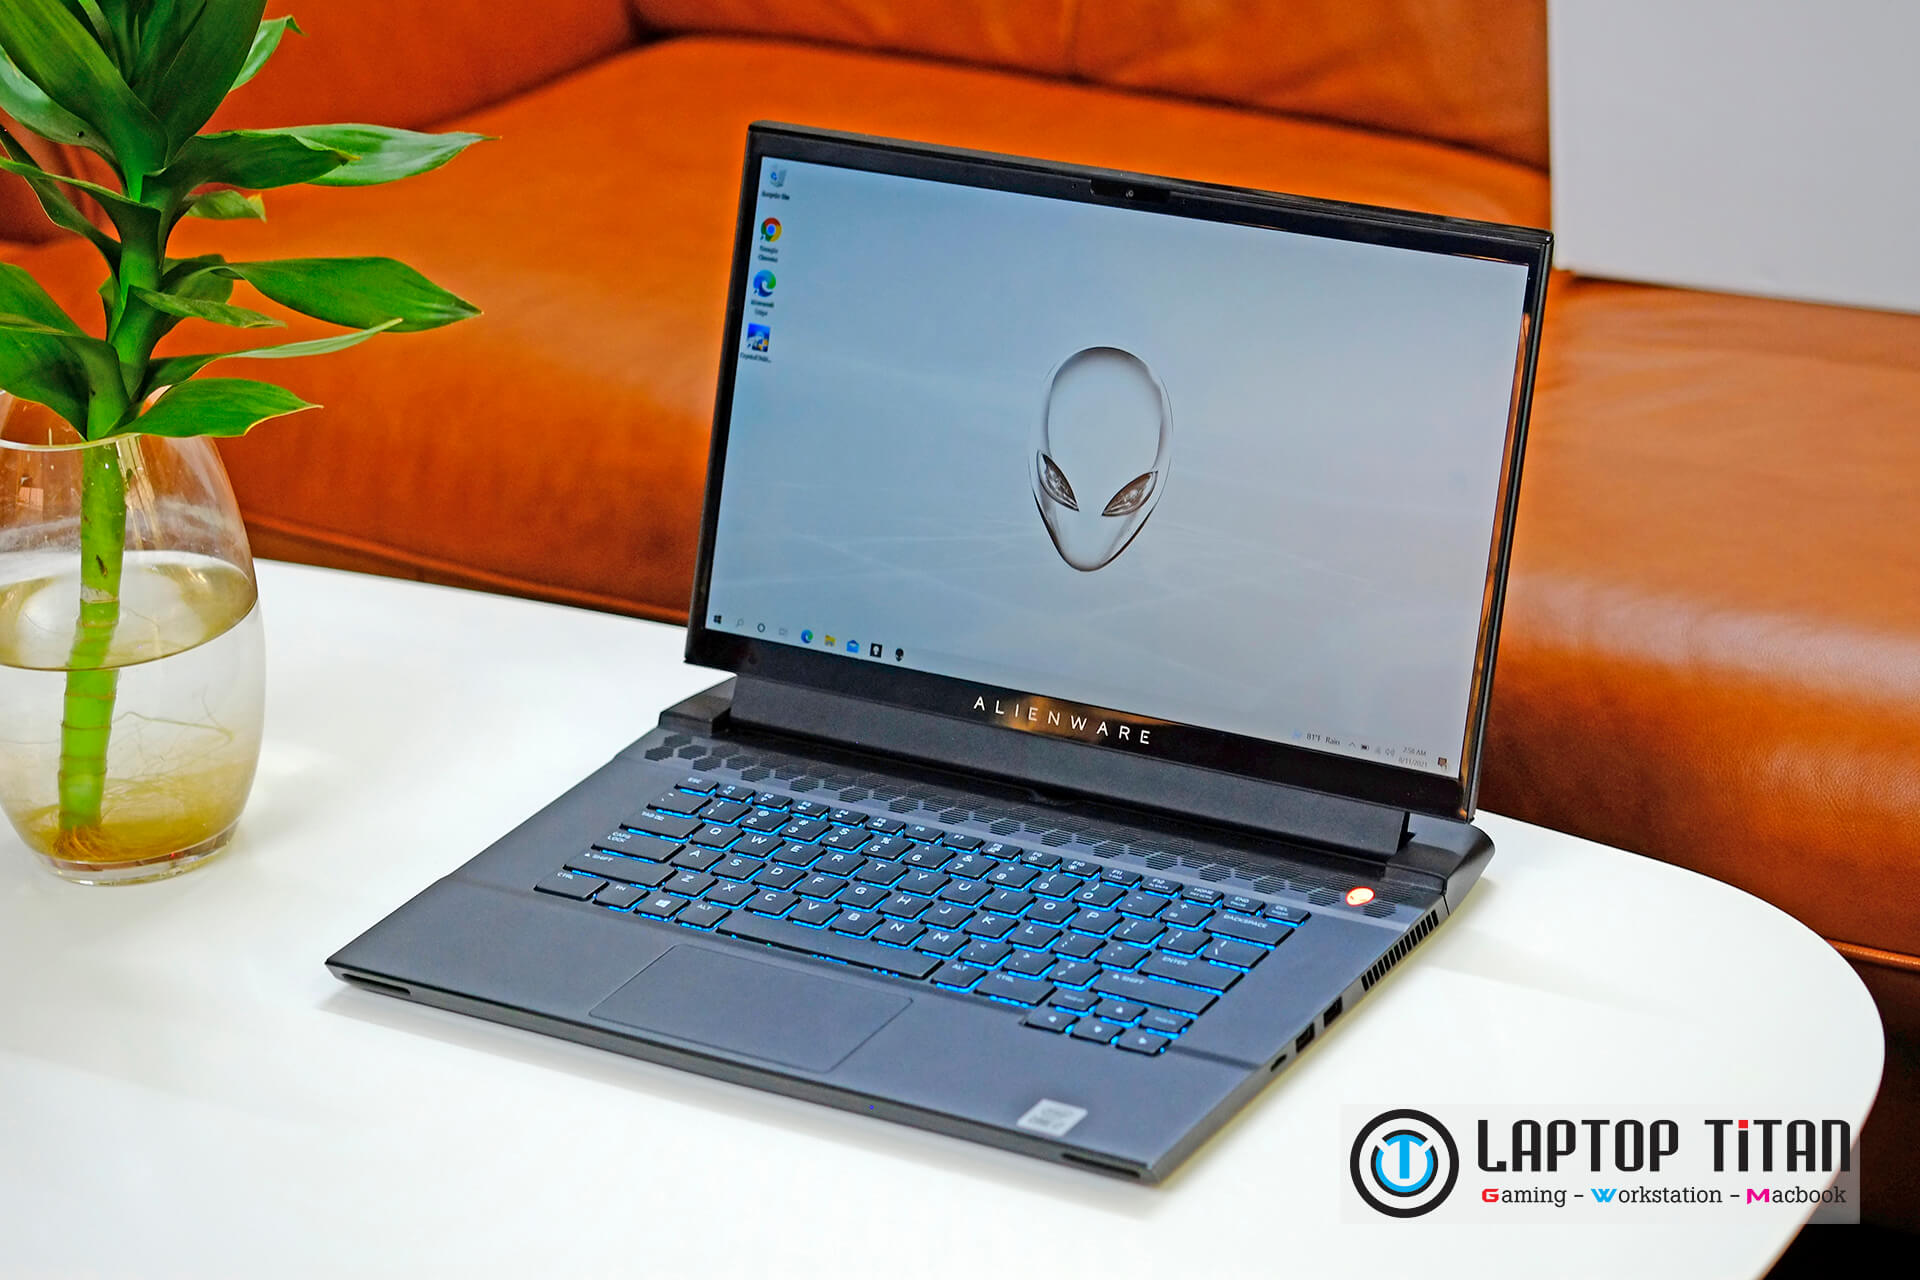 Dell-Alienware-M15-R3-laptoptitan-02.jpg